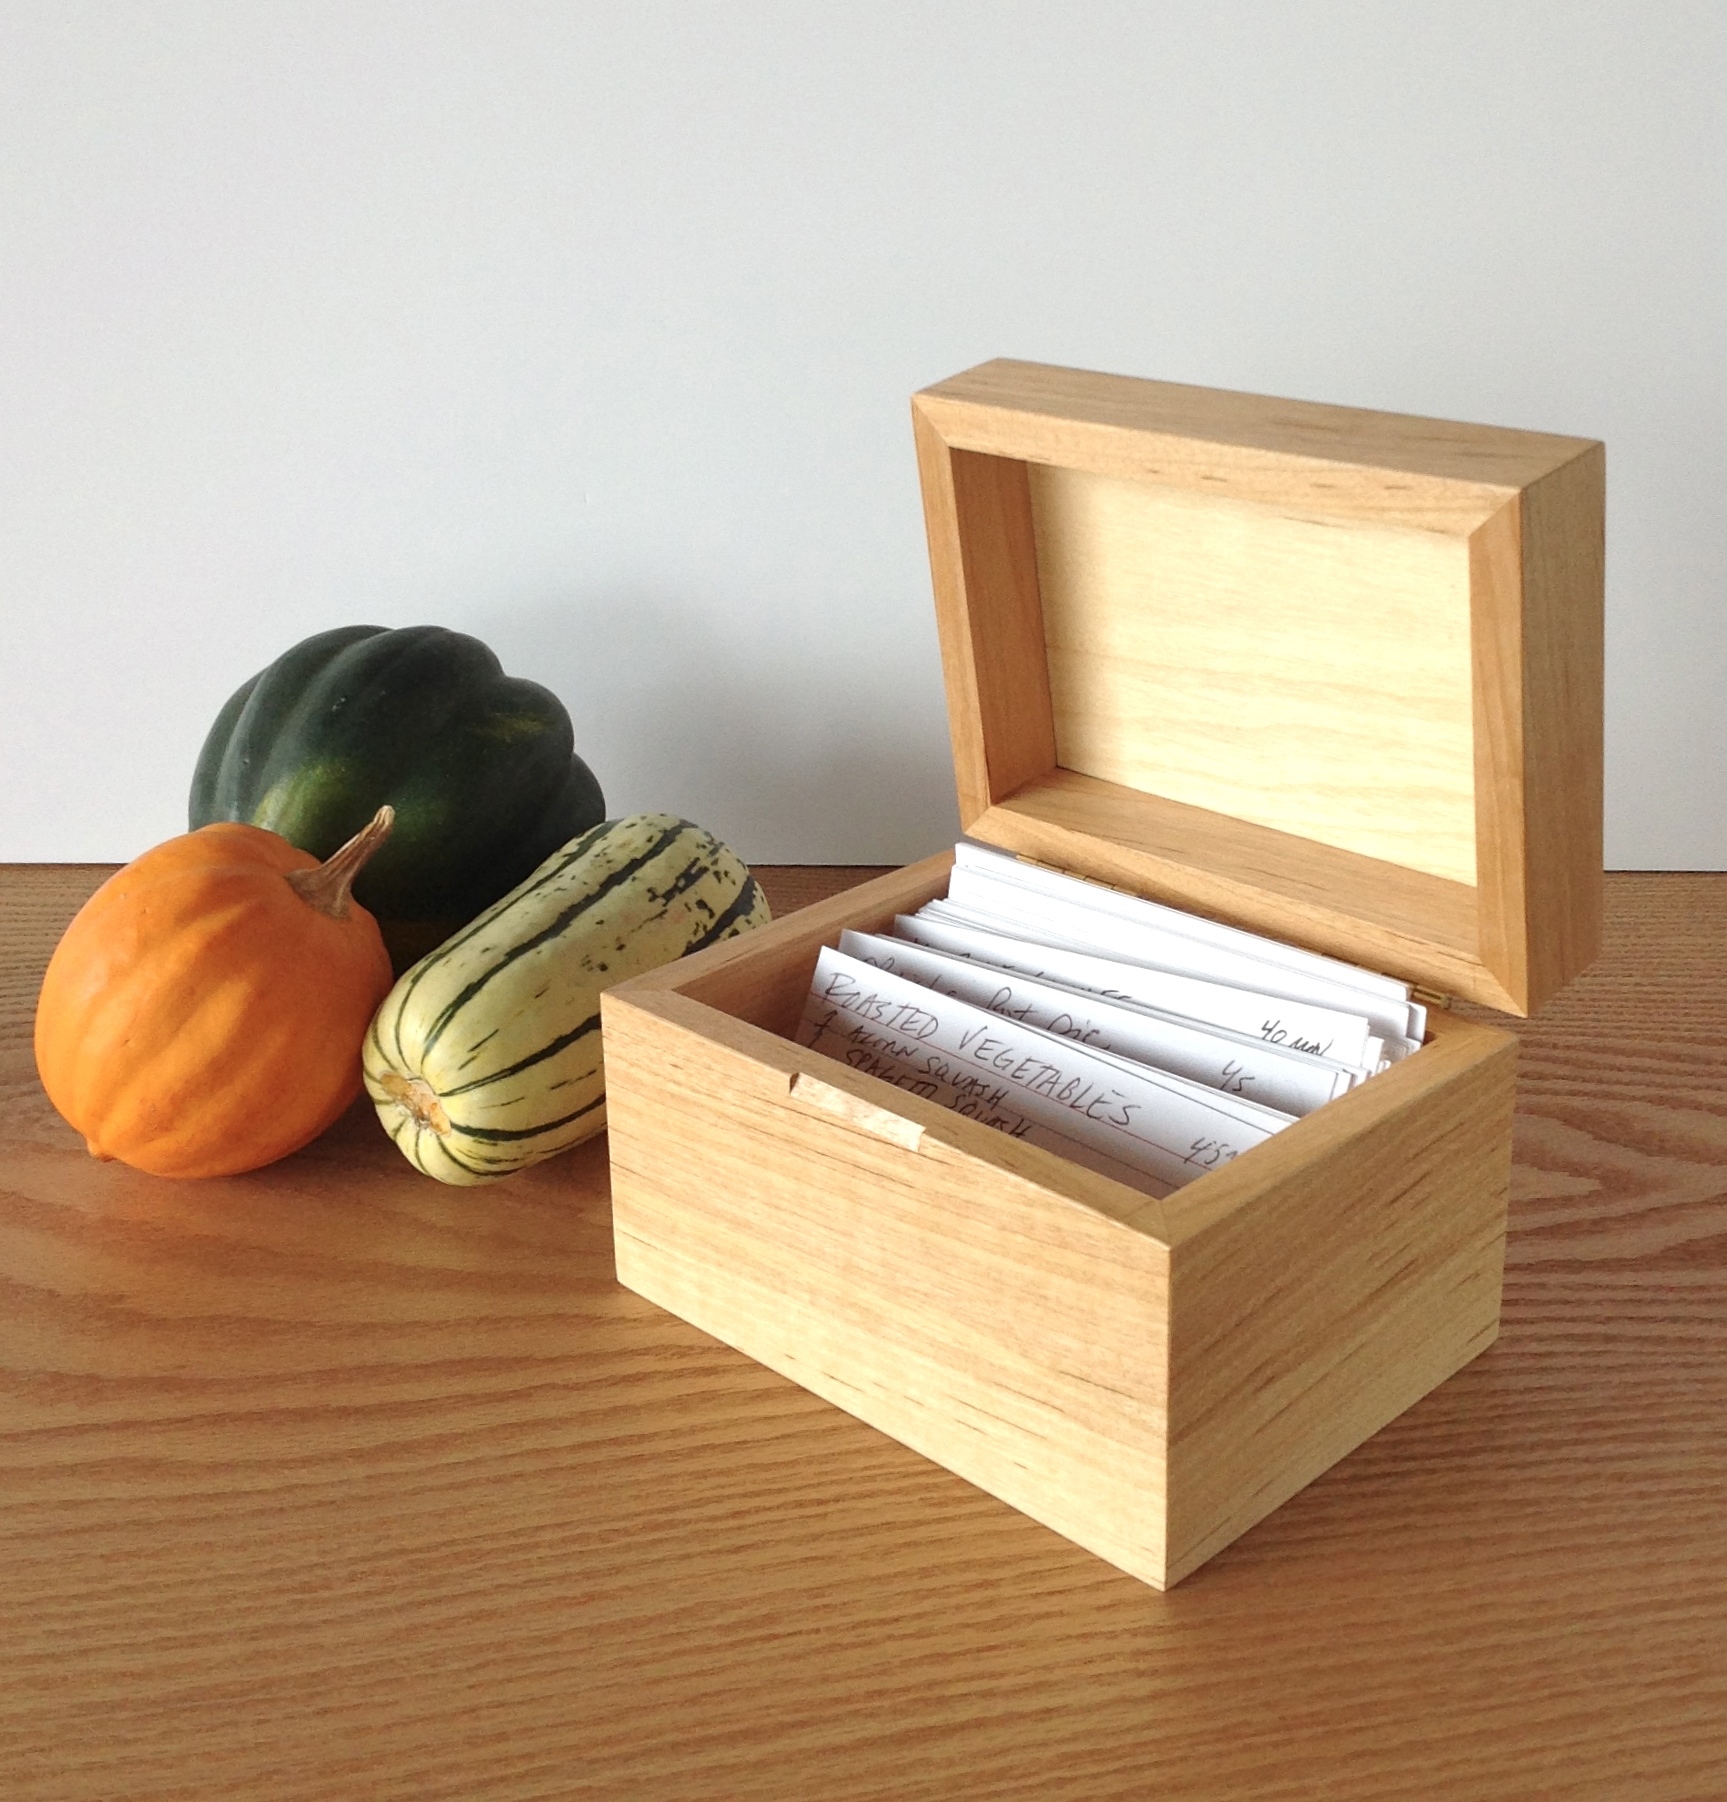 DIY simple wooden recipe box for beginners (via www.wwgoa.com)